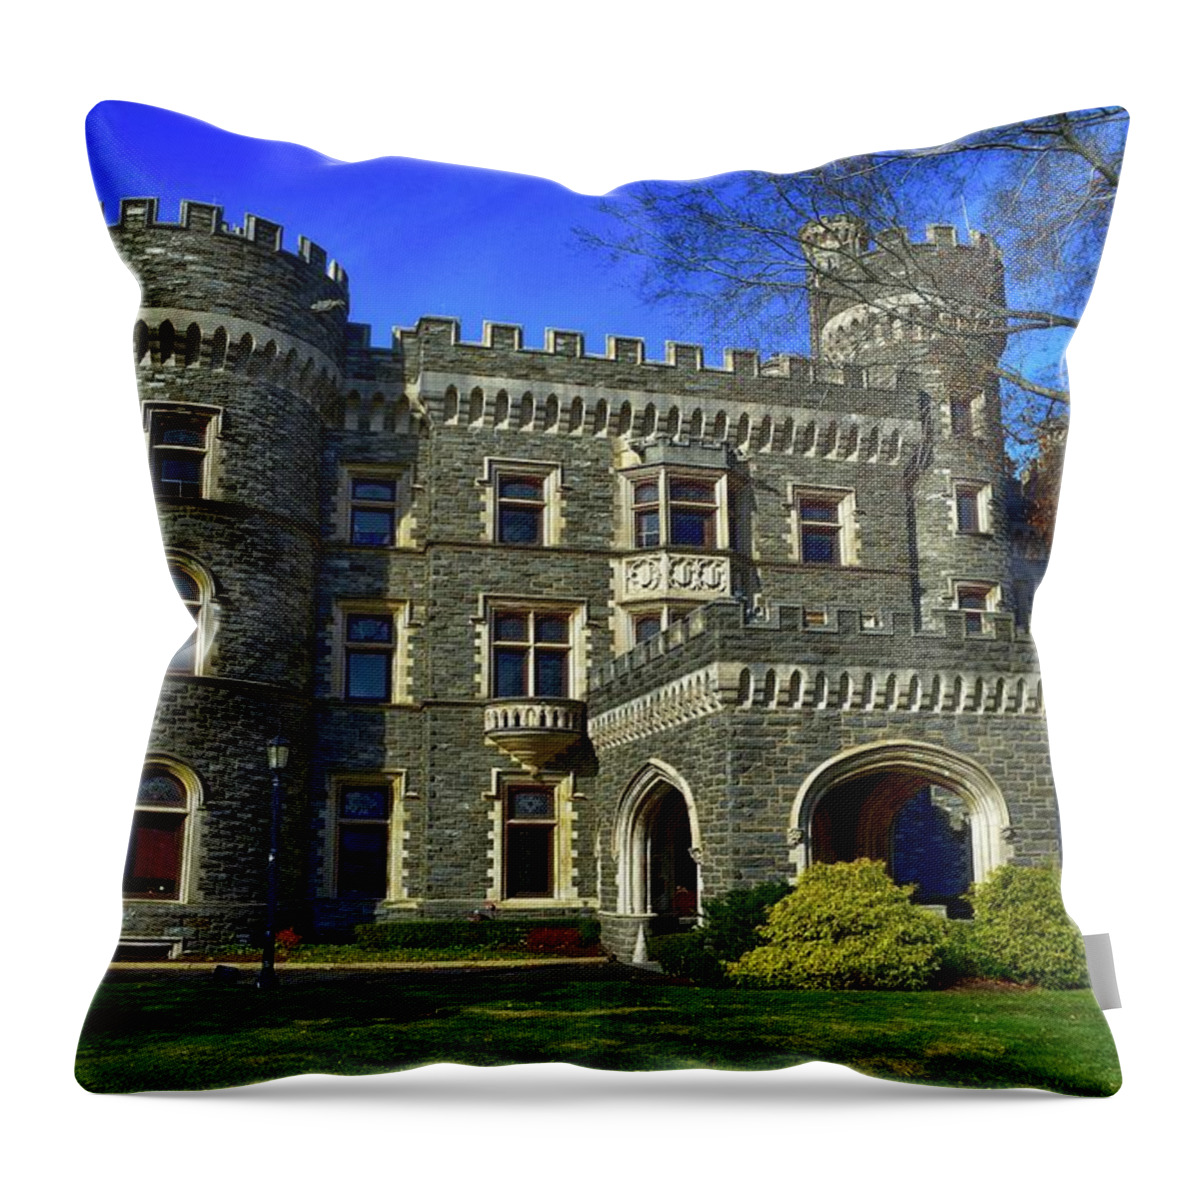 Arcadia University Throw Pillow featuring the photograph Arcadia University by James DeFazio